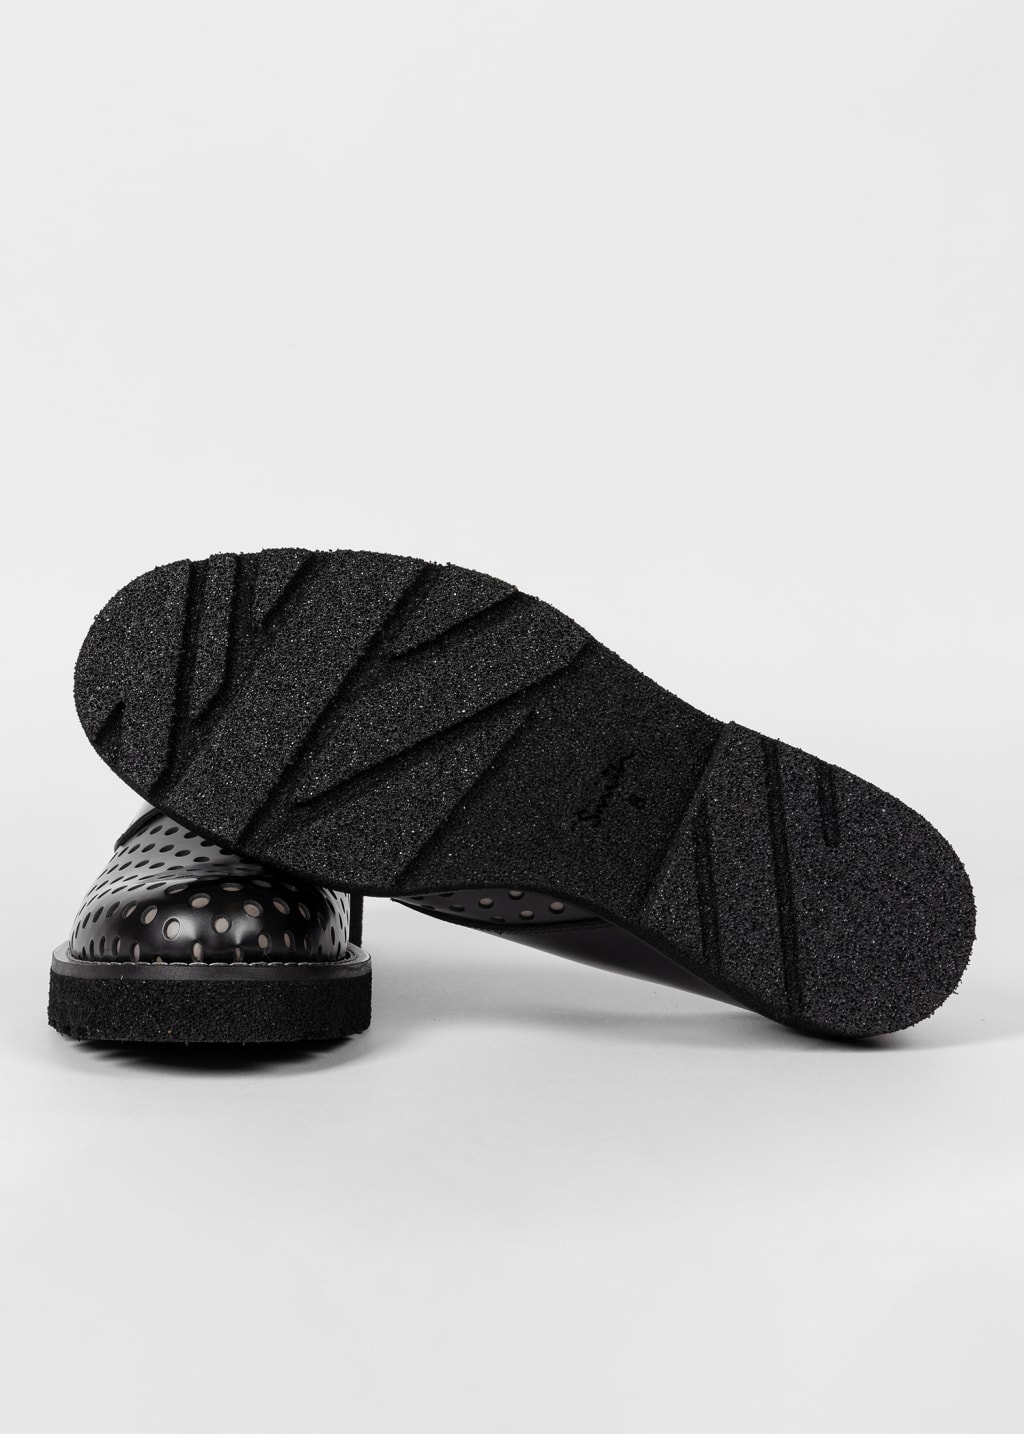 Detail View - Black Leather 'Eldrick' Shoes Paul Smith